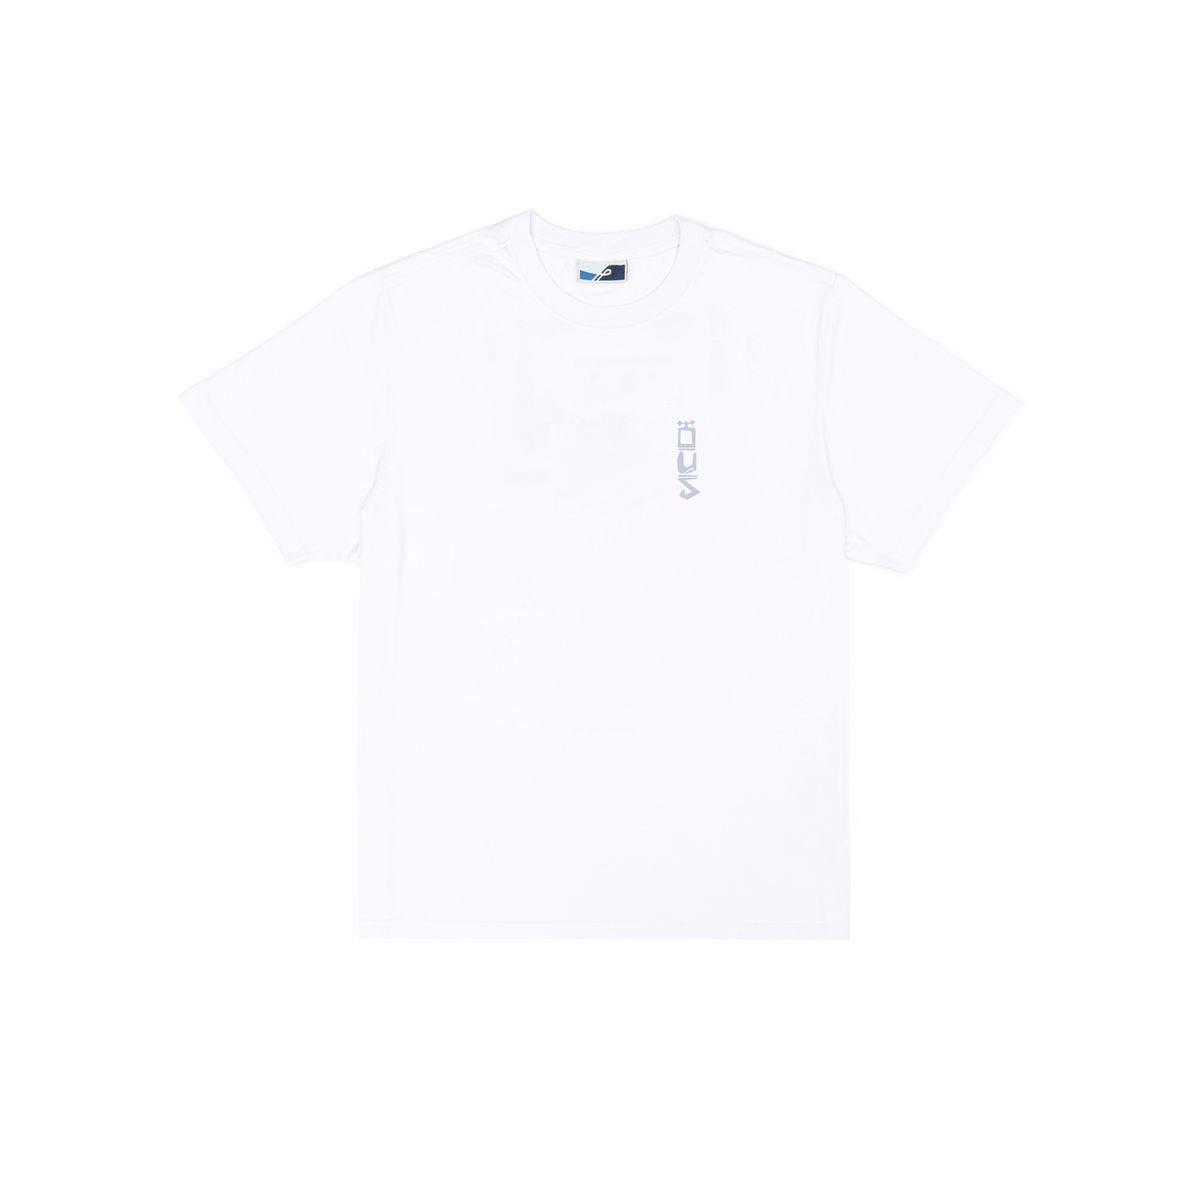 Camiseta Öus Araucária Branco